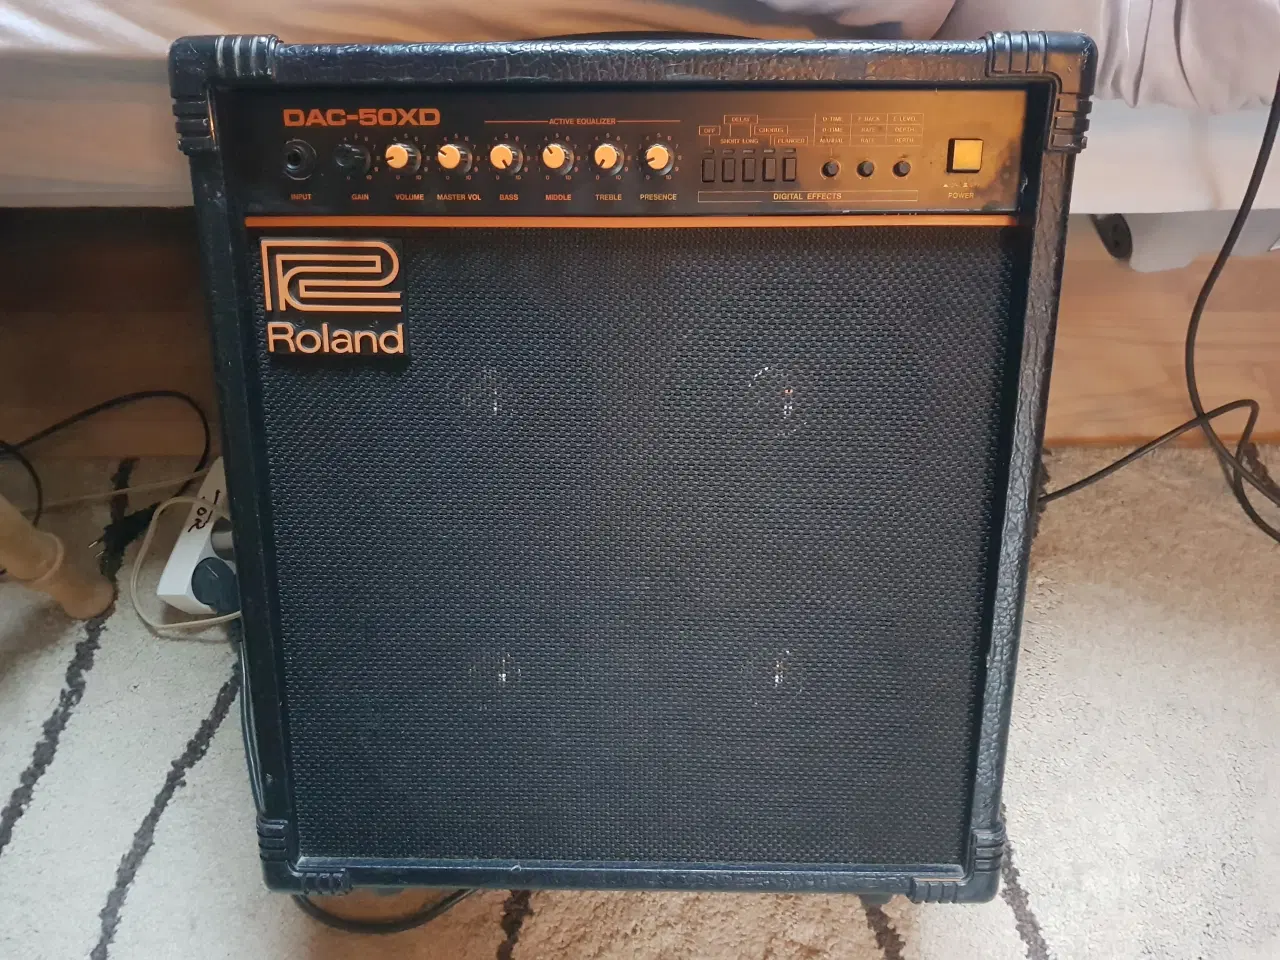 Billede 2 - Guitarcombo, Roland DAC-50 XD, 50 W